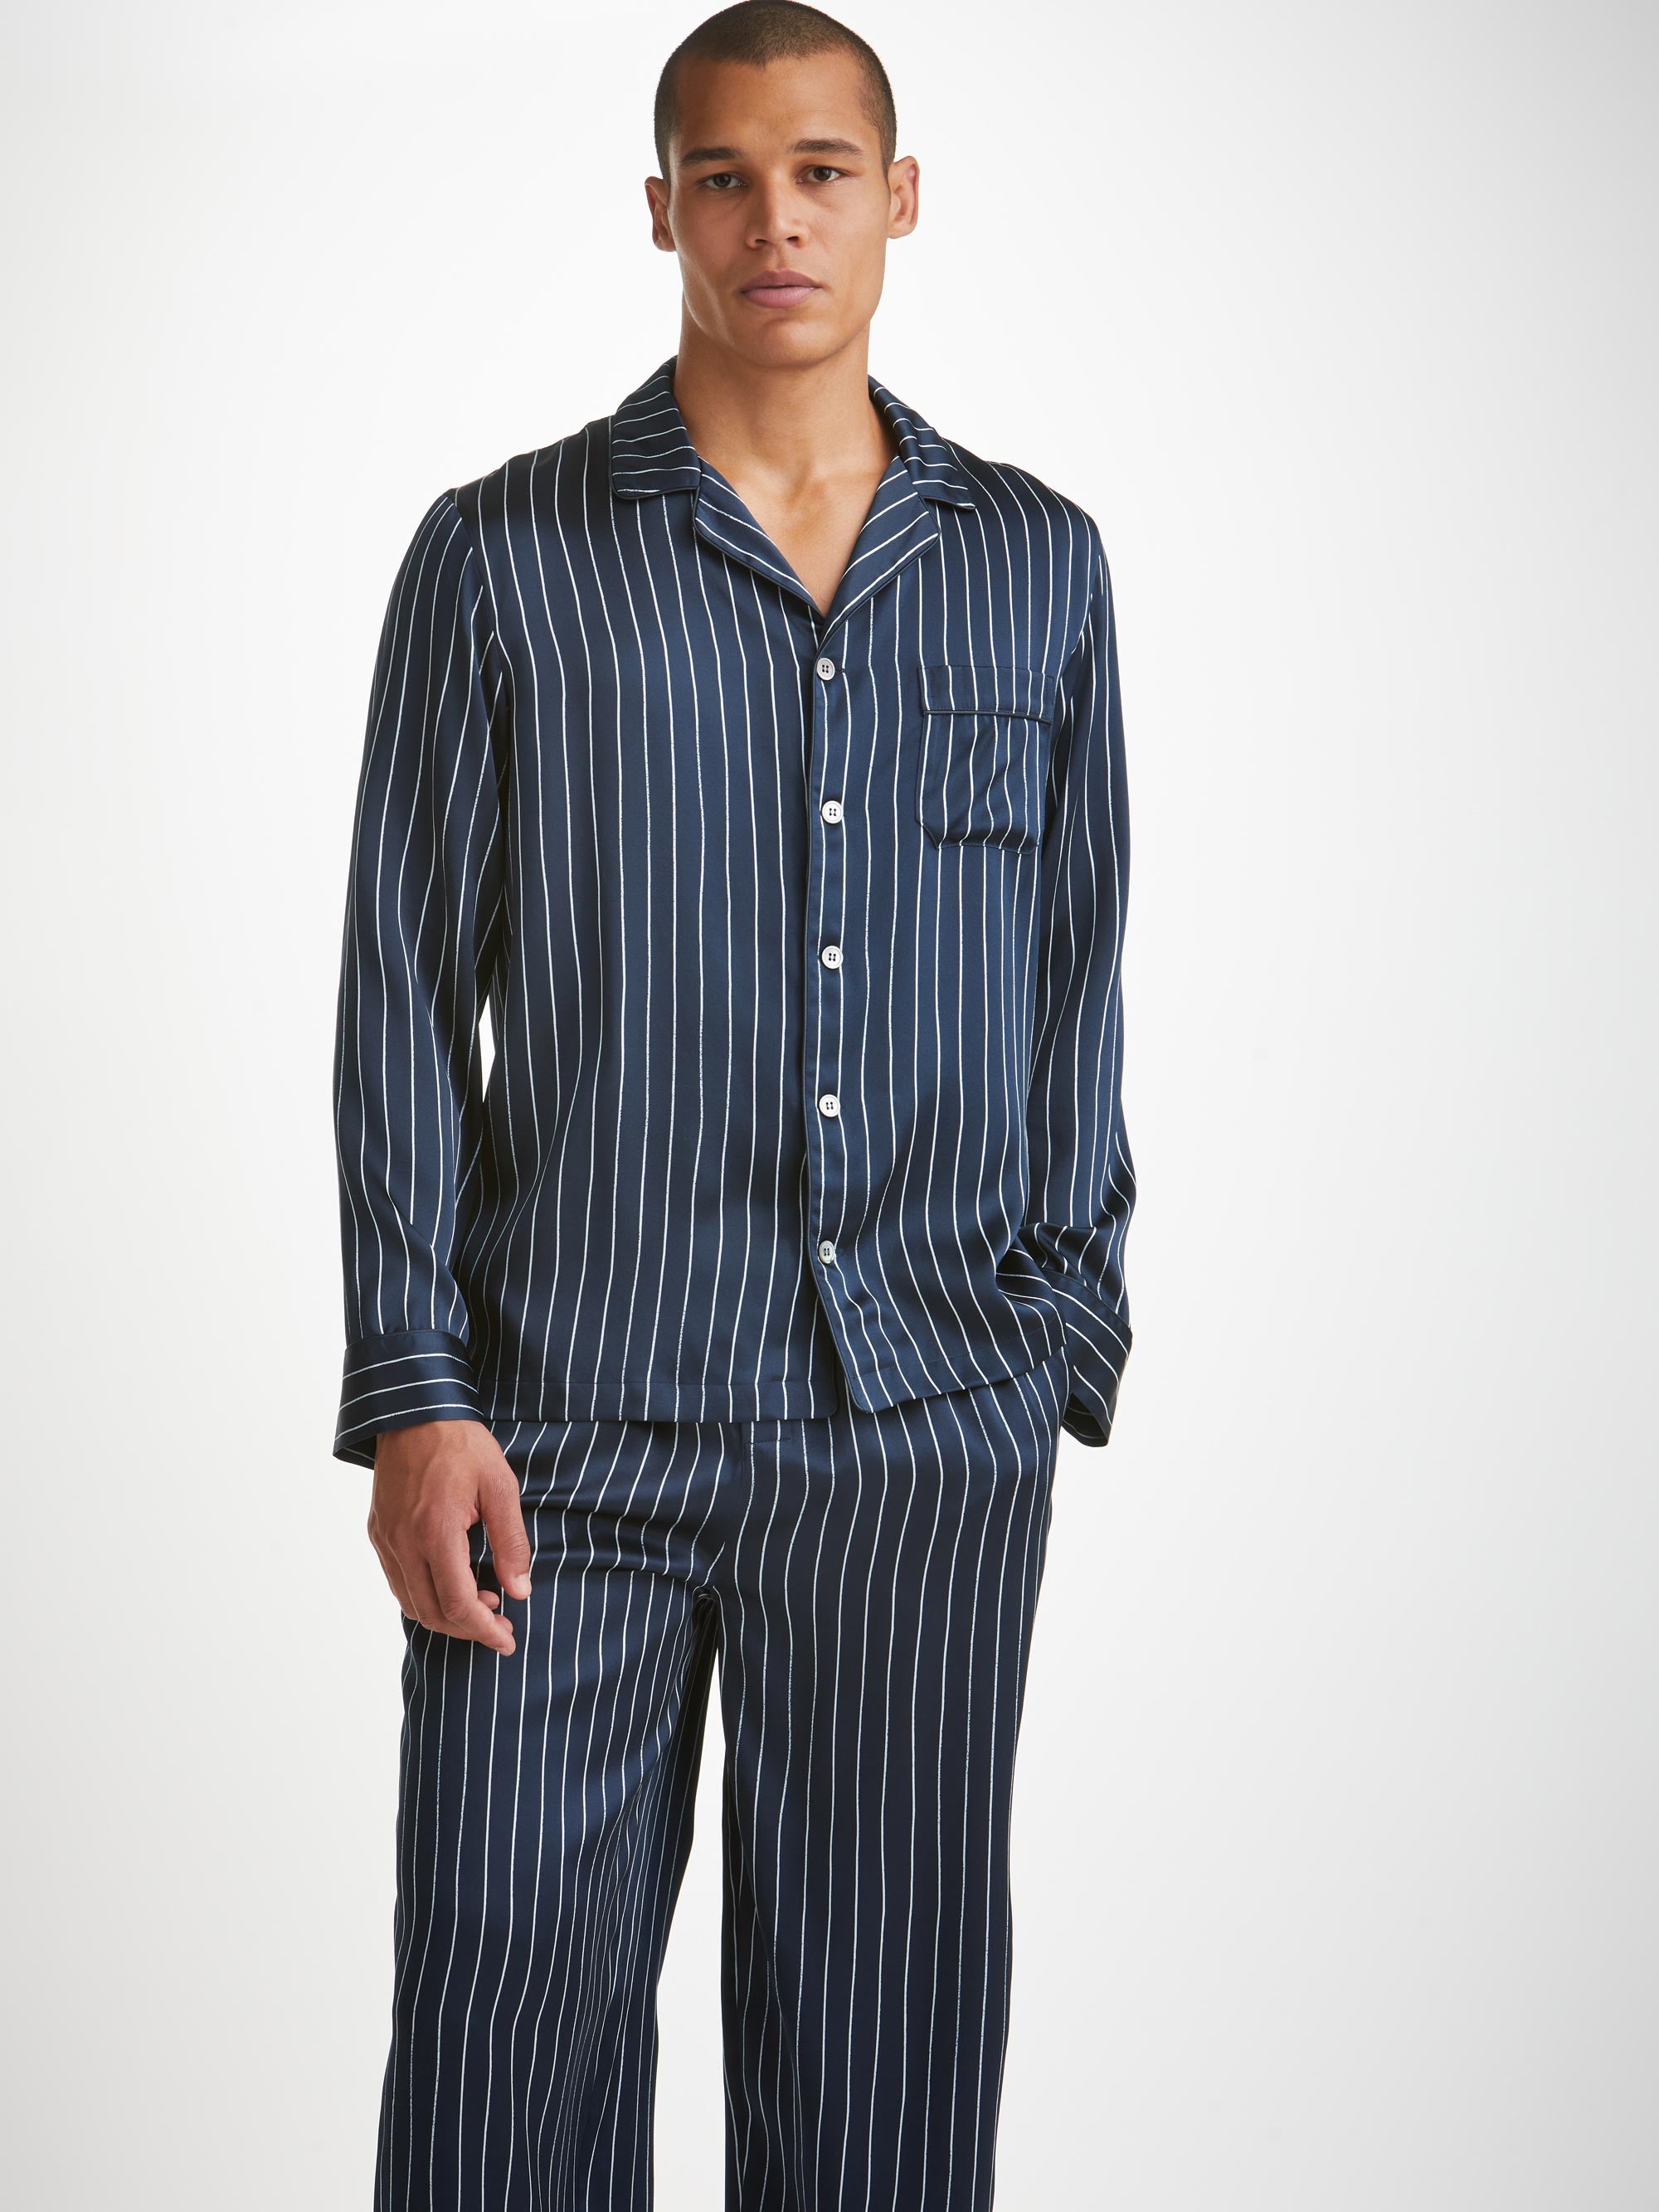 Men's Pyjamas Brindisi 102 Silk Satin Navy